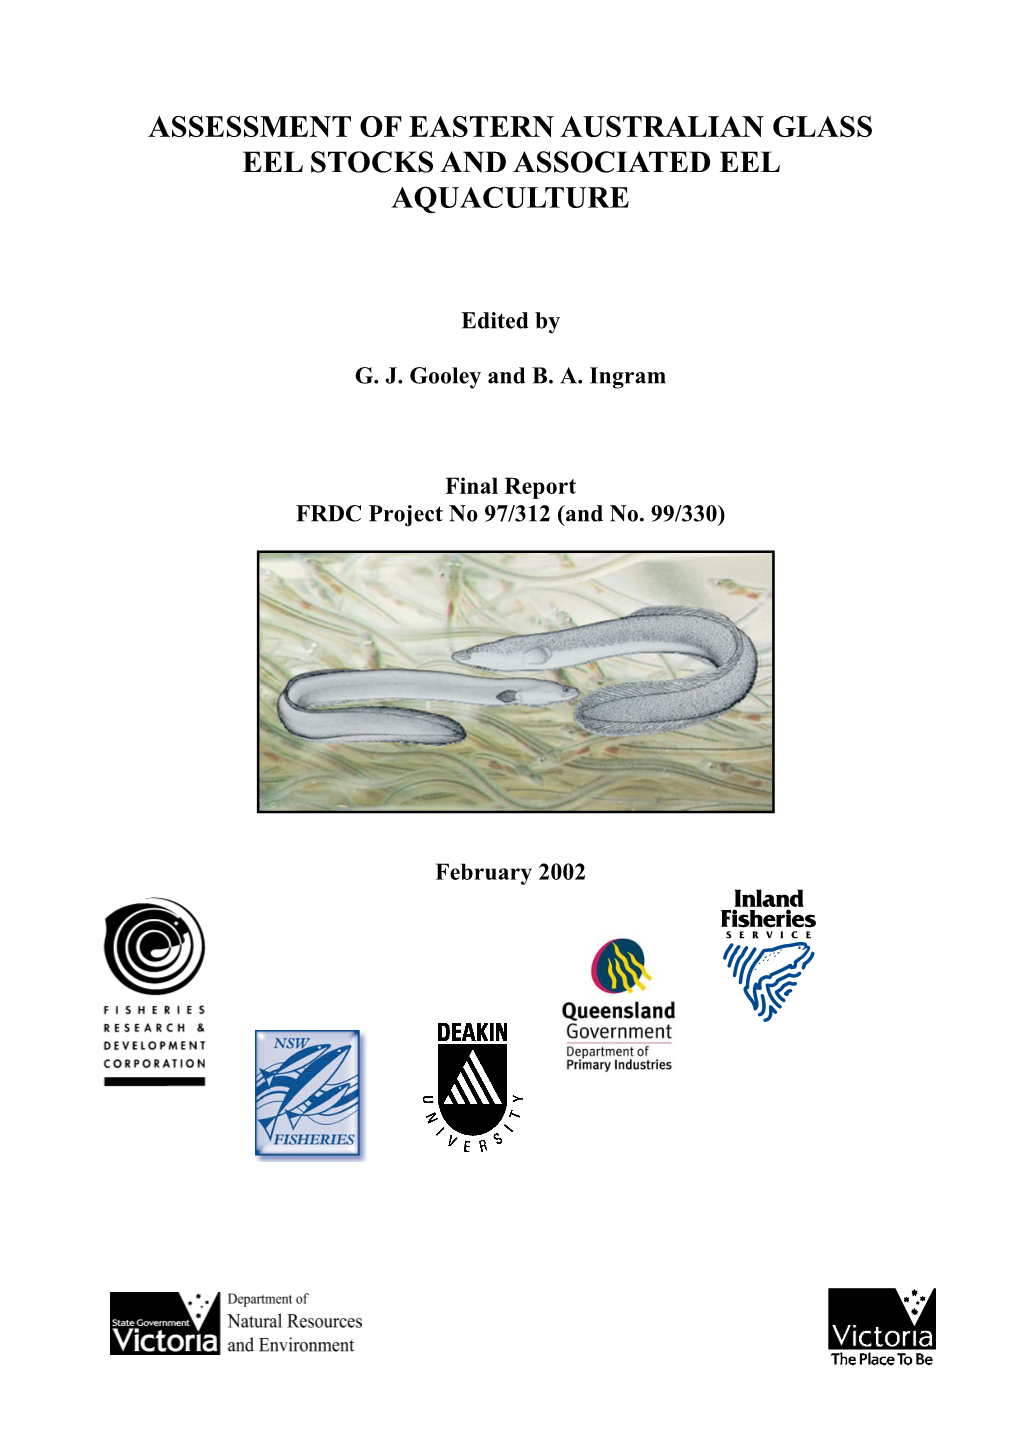 Assessment of Eastern Australian Glass Eel Stocks and Associated Eel Aquaculture